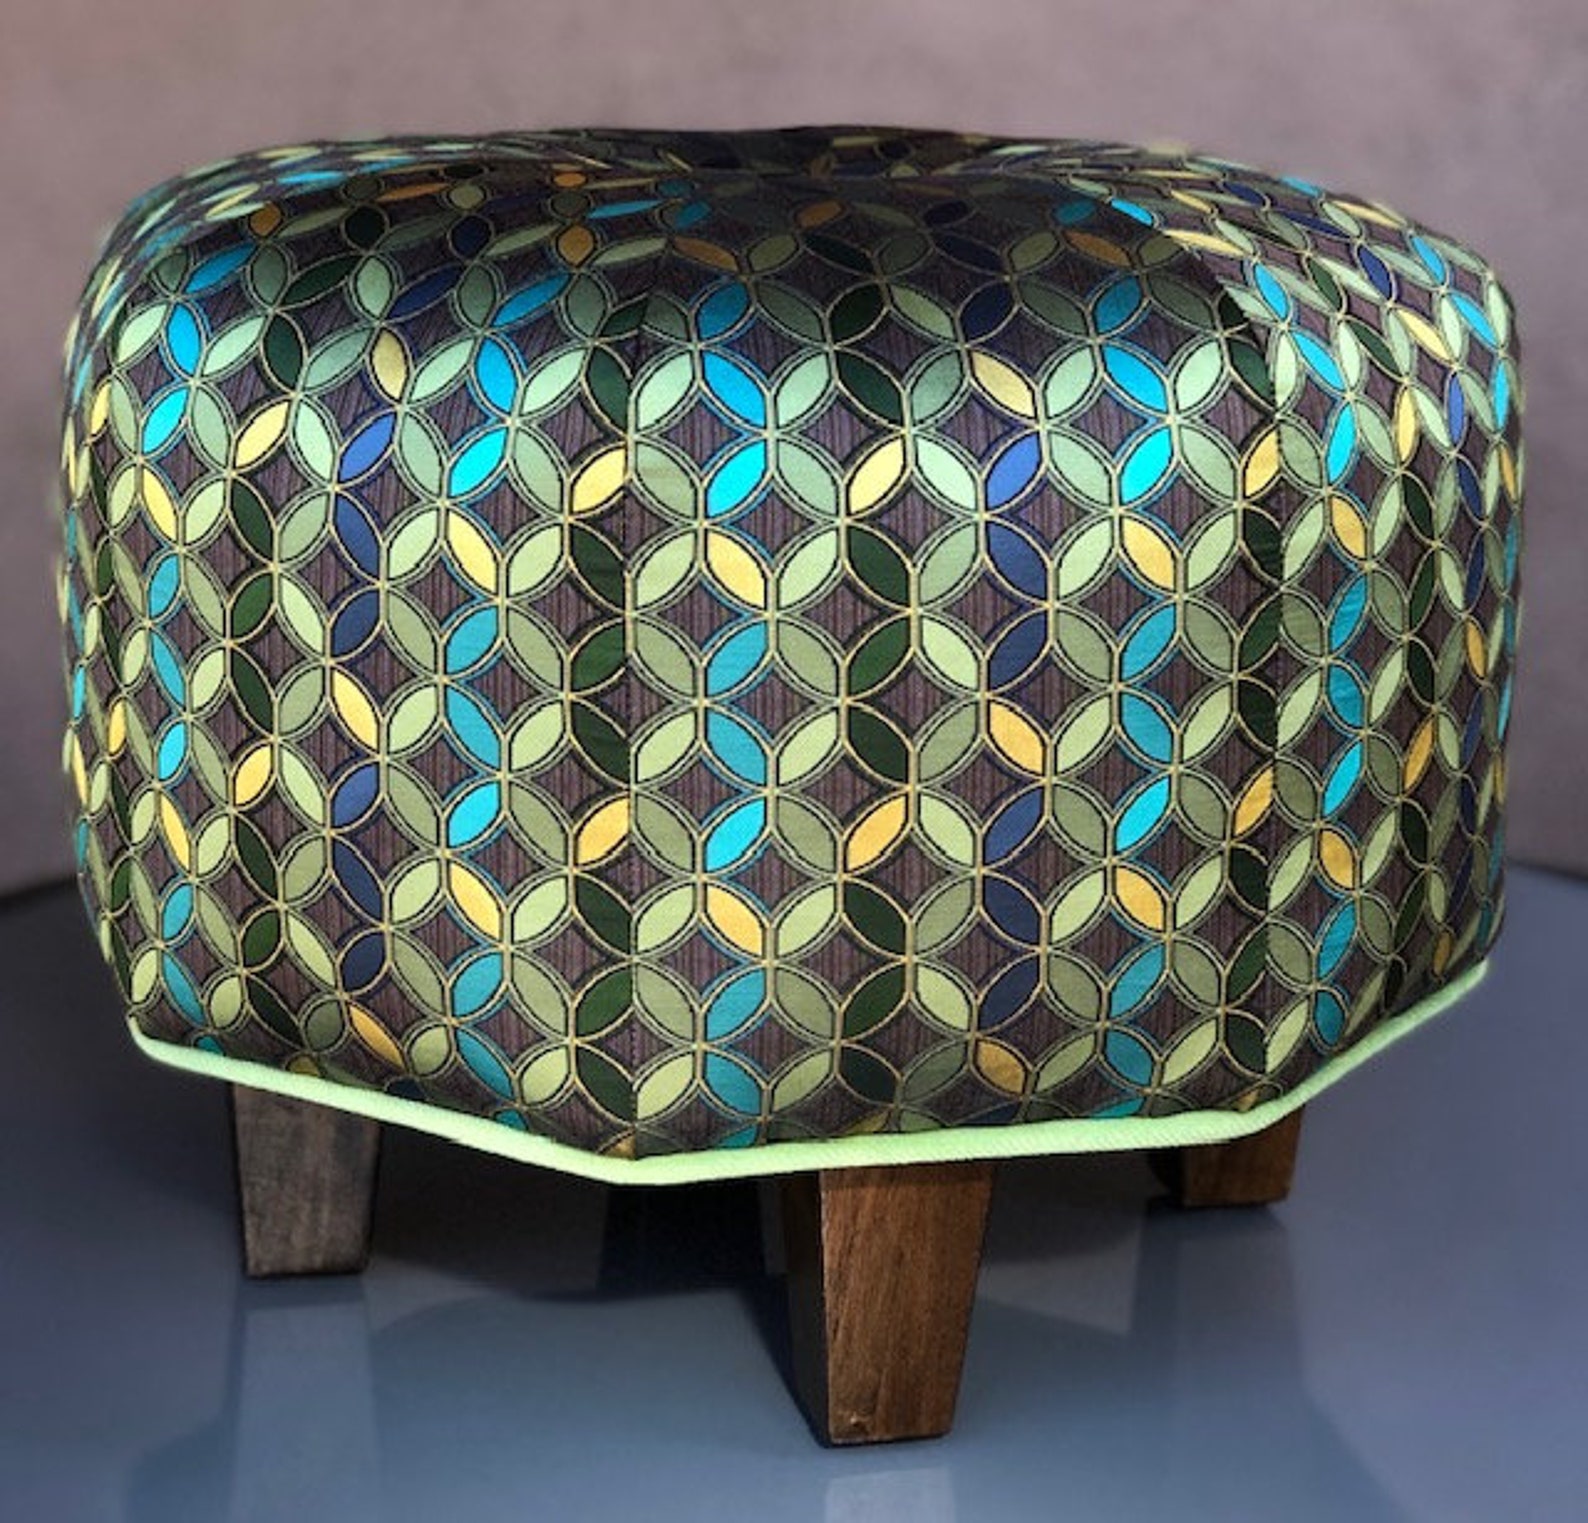 Kaleidoscope Circles Pouf Ottoman Pouf Footstool Woven | Etsy